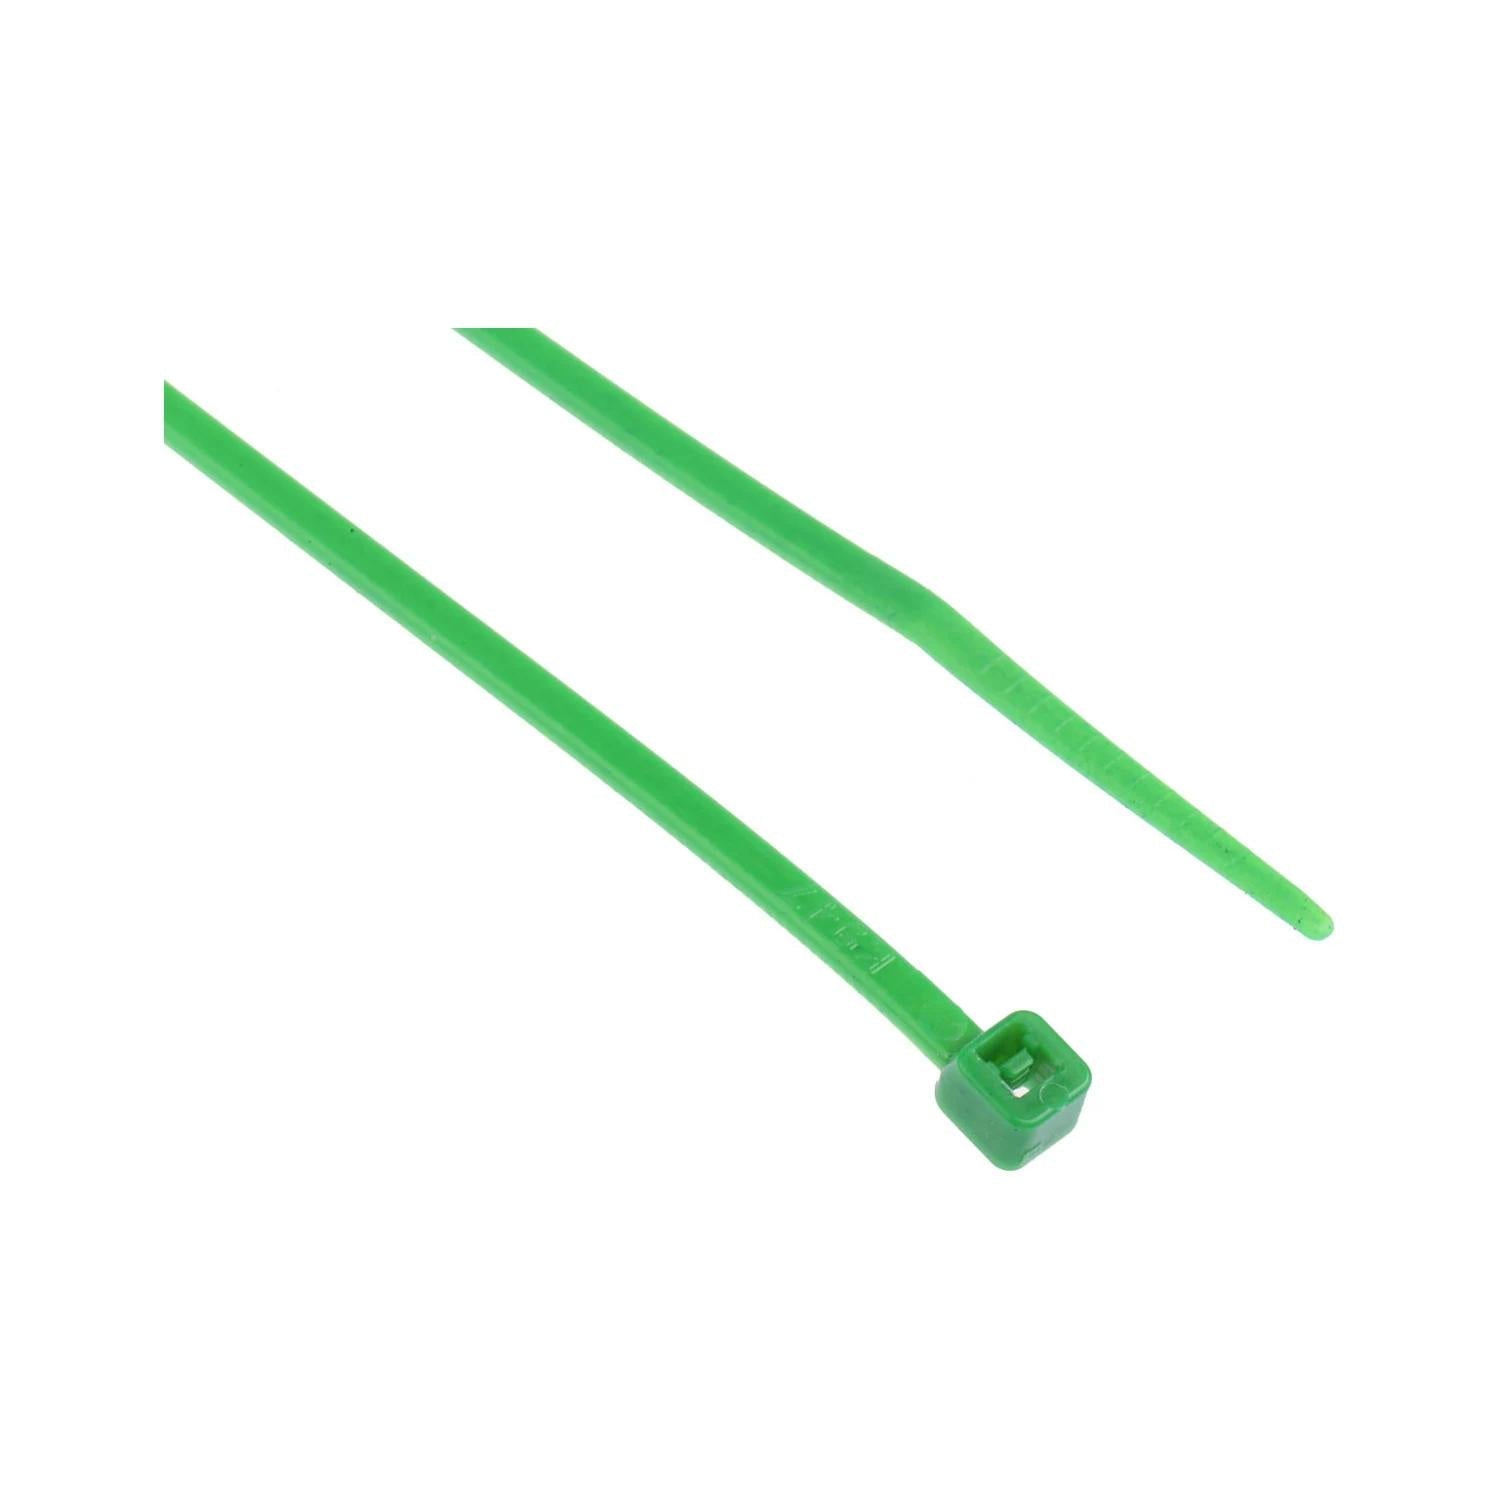 Cable Tie Premium Selfit SapiSelco-Wire & Cable Ties-SapiSelco-Green-ℓ200 x 𝑤4.5mm-𝑝/100-diyshop.co.za